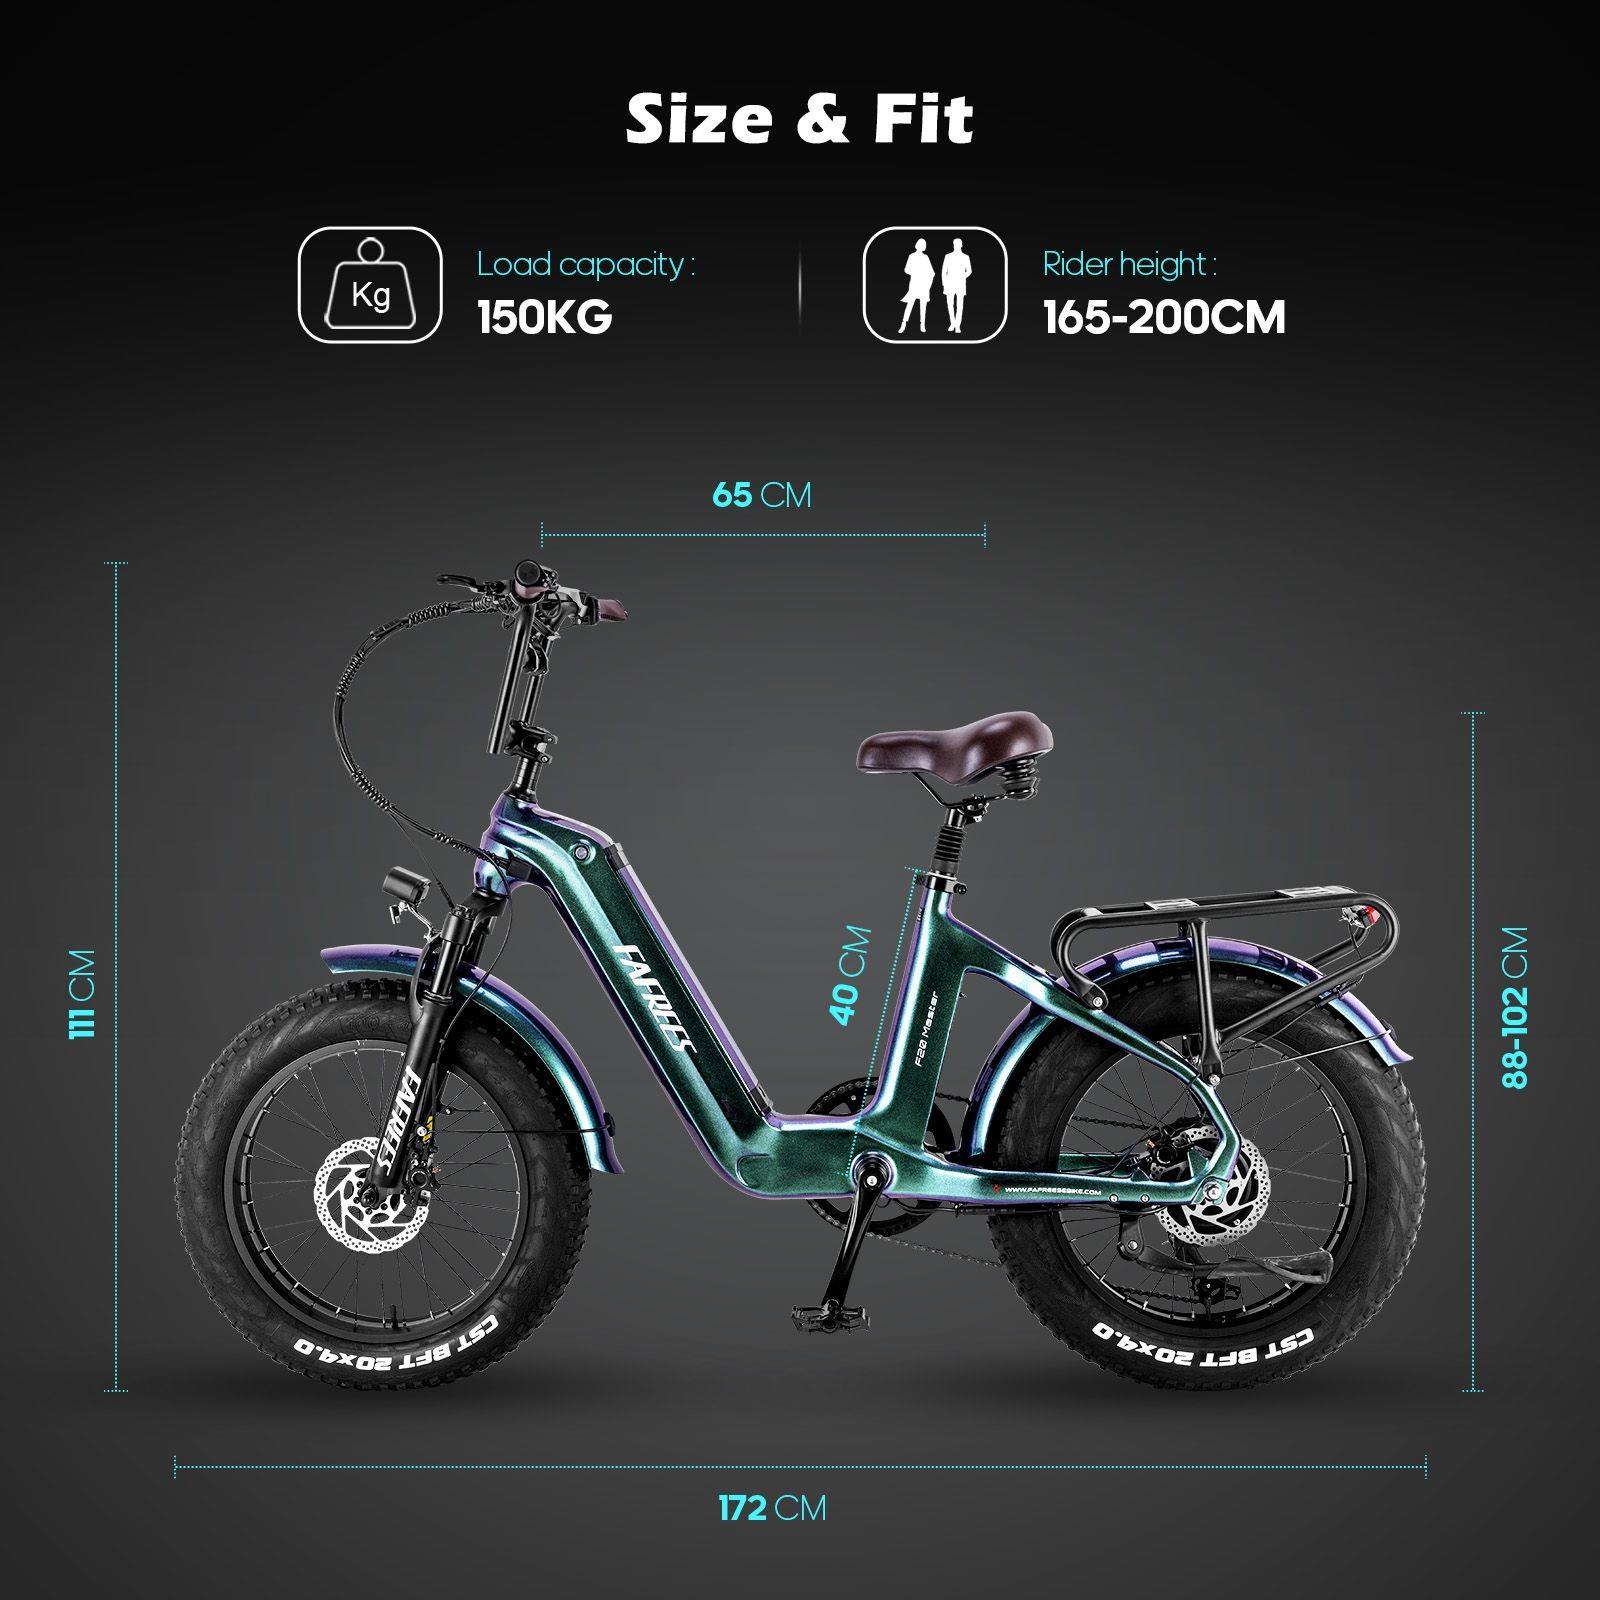 FAFREES F20 Master Elektrische fiets, Carbon Fiber, 500W Hub Motor, 48V 22.5Ah Samsung Batterij, 20 * 4.0 Inch Luchtband - Groen